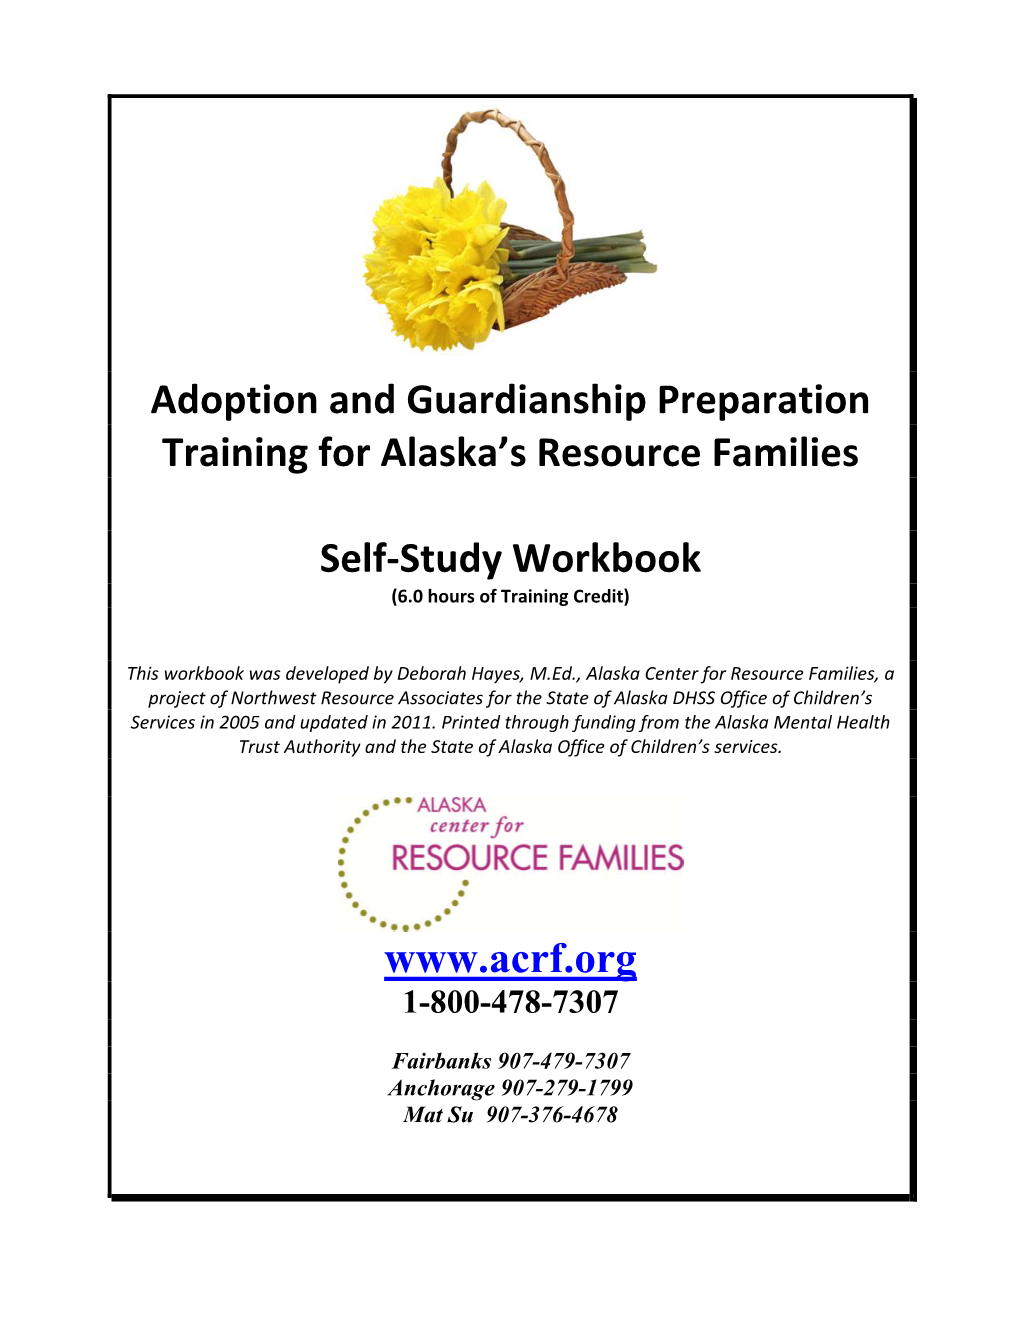 Adoption and Guardianship Preparation Training for Alaska's